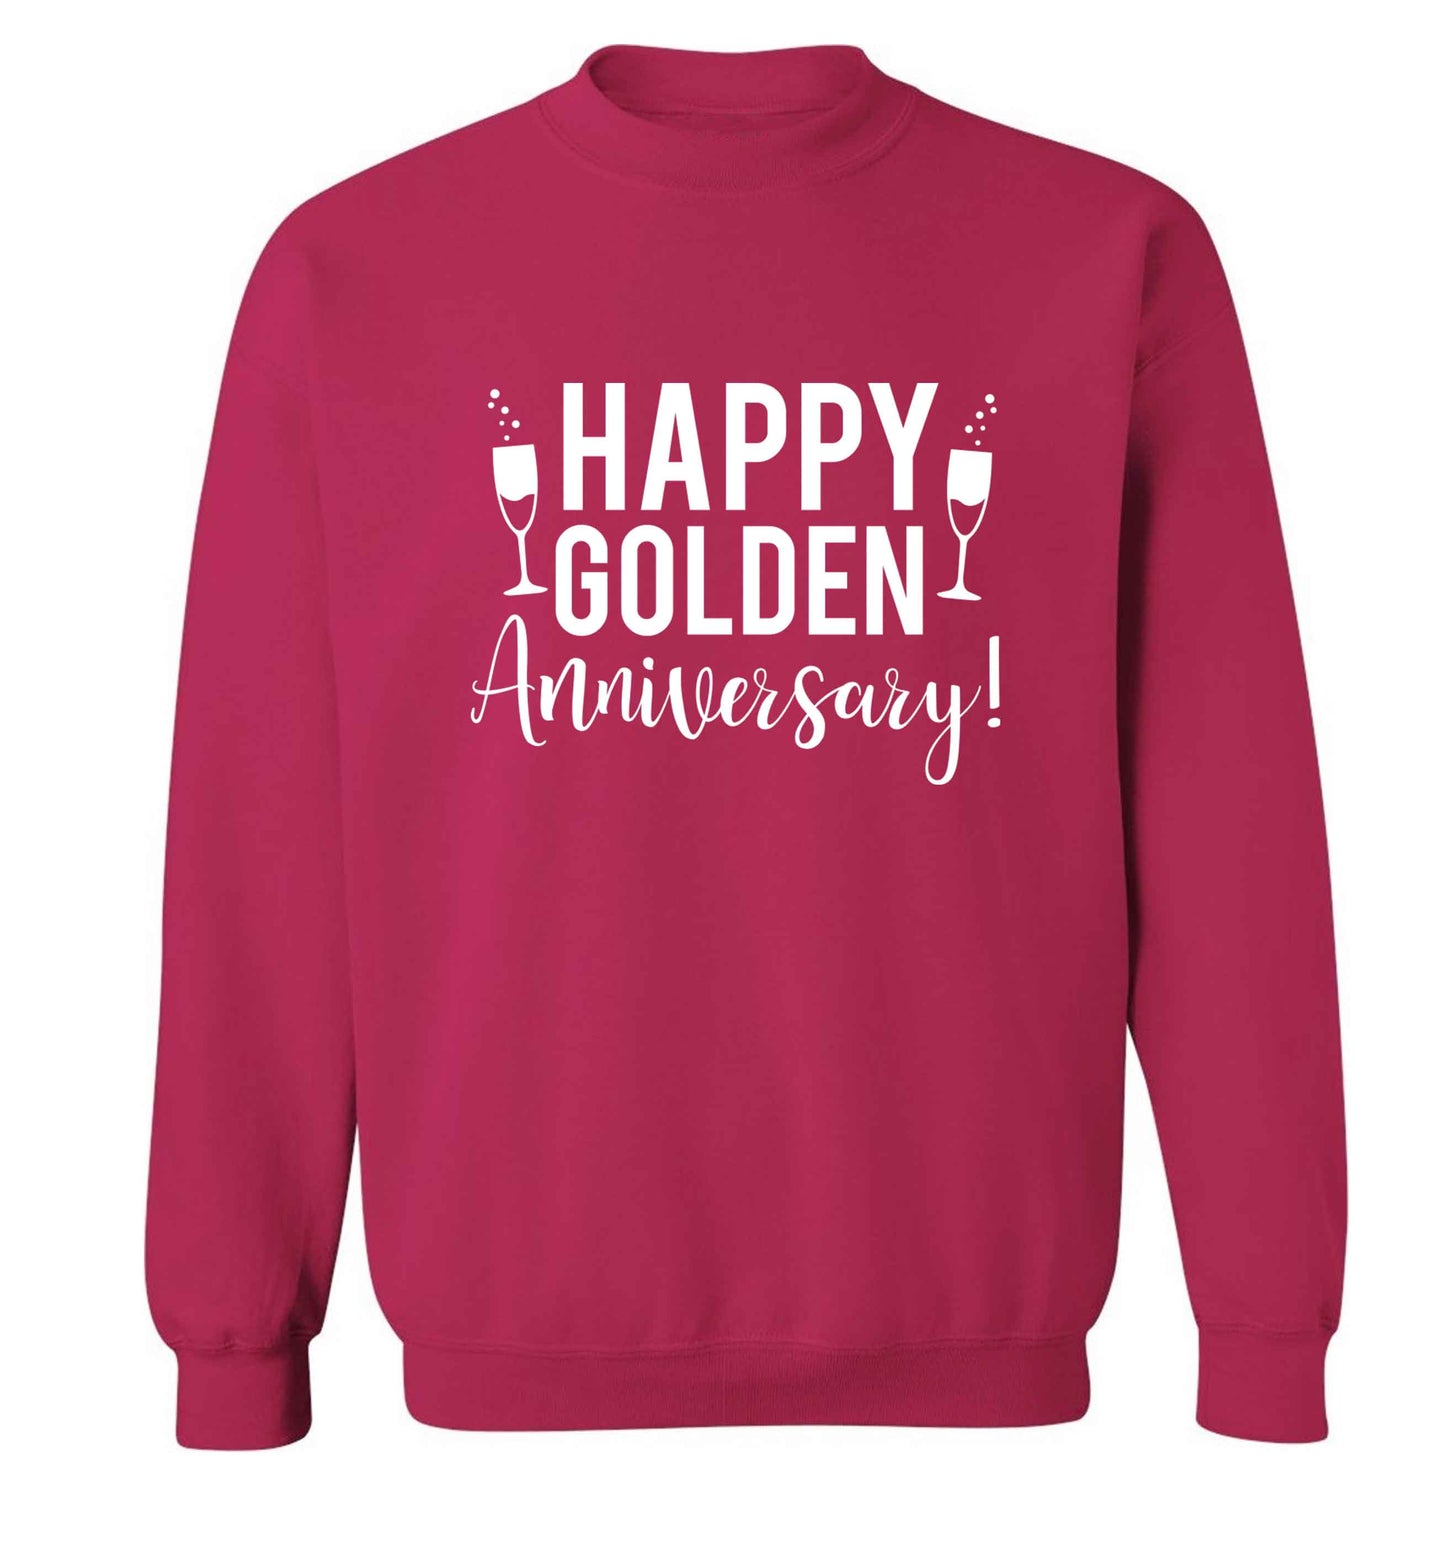 Happy golden anniversary! adult's unisex pink sweater 2XL